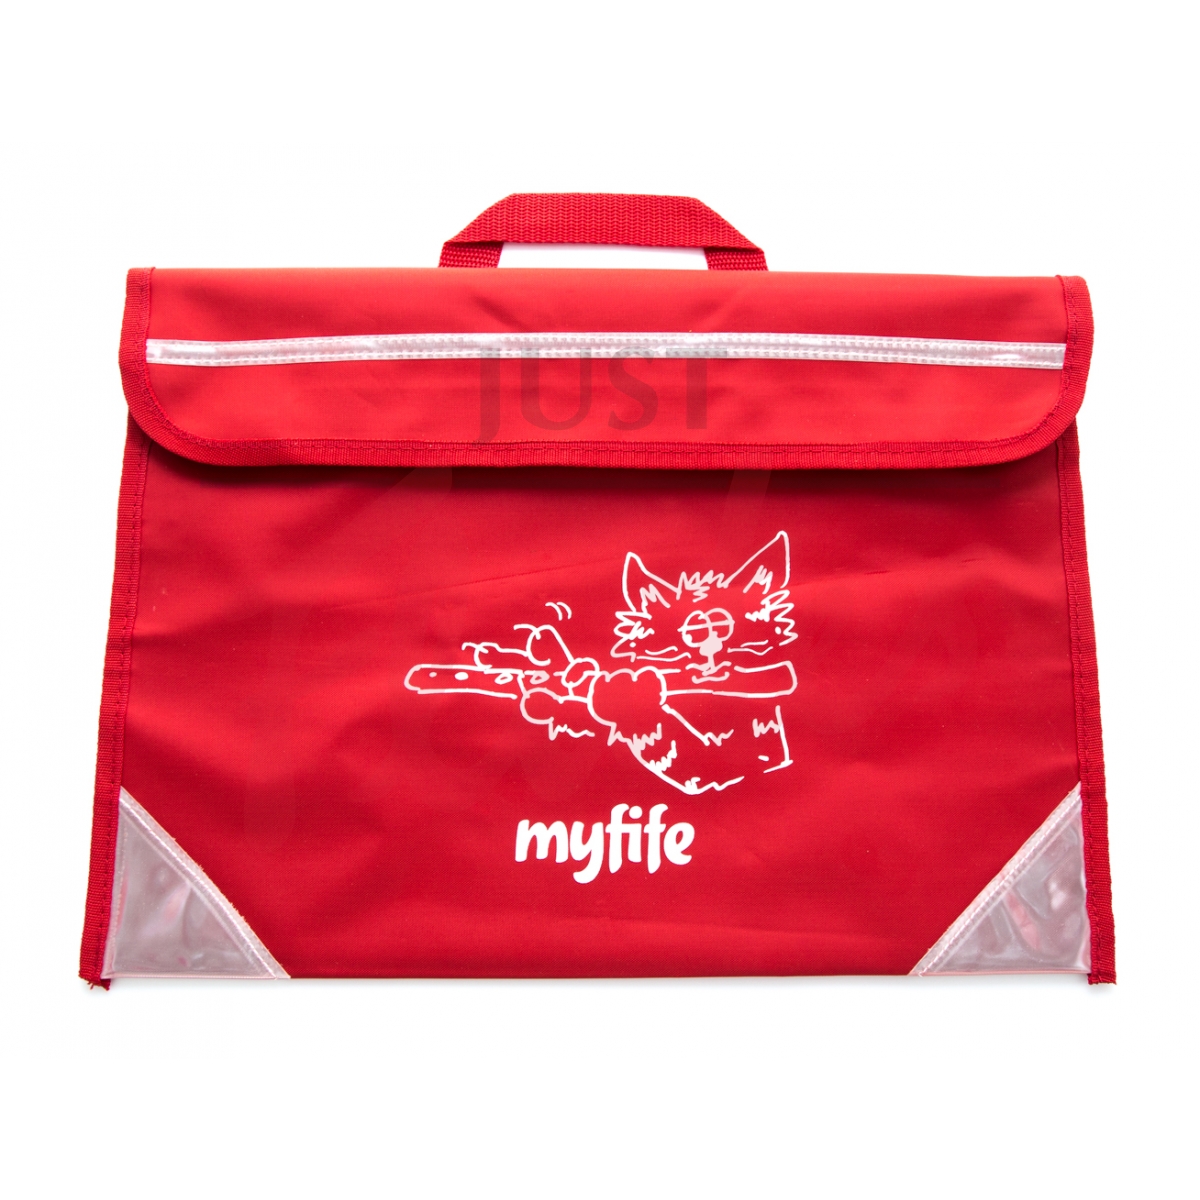 myfife Carry Bag